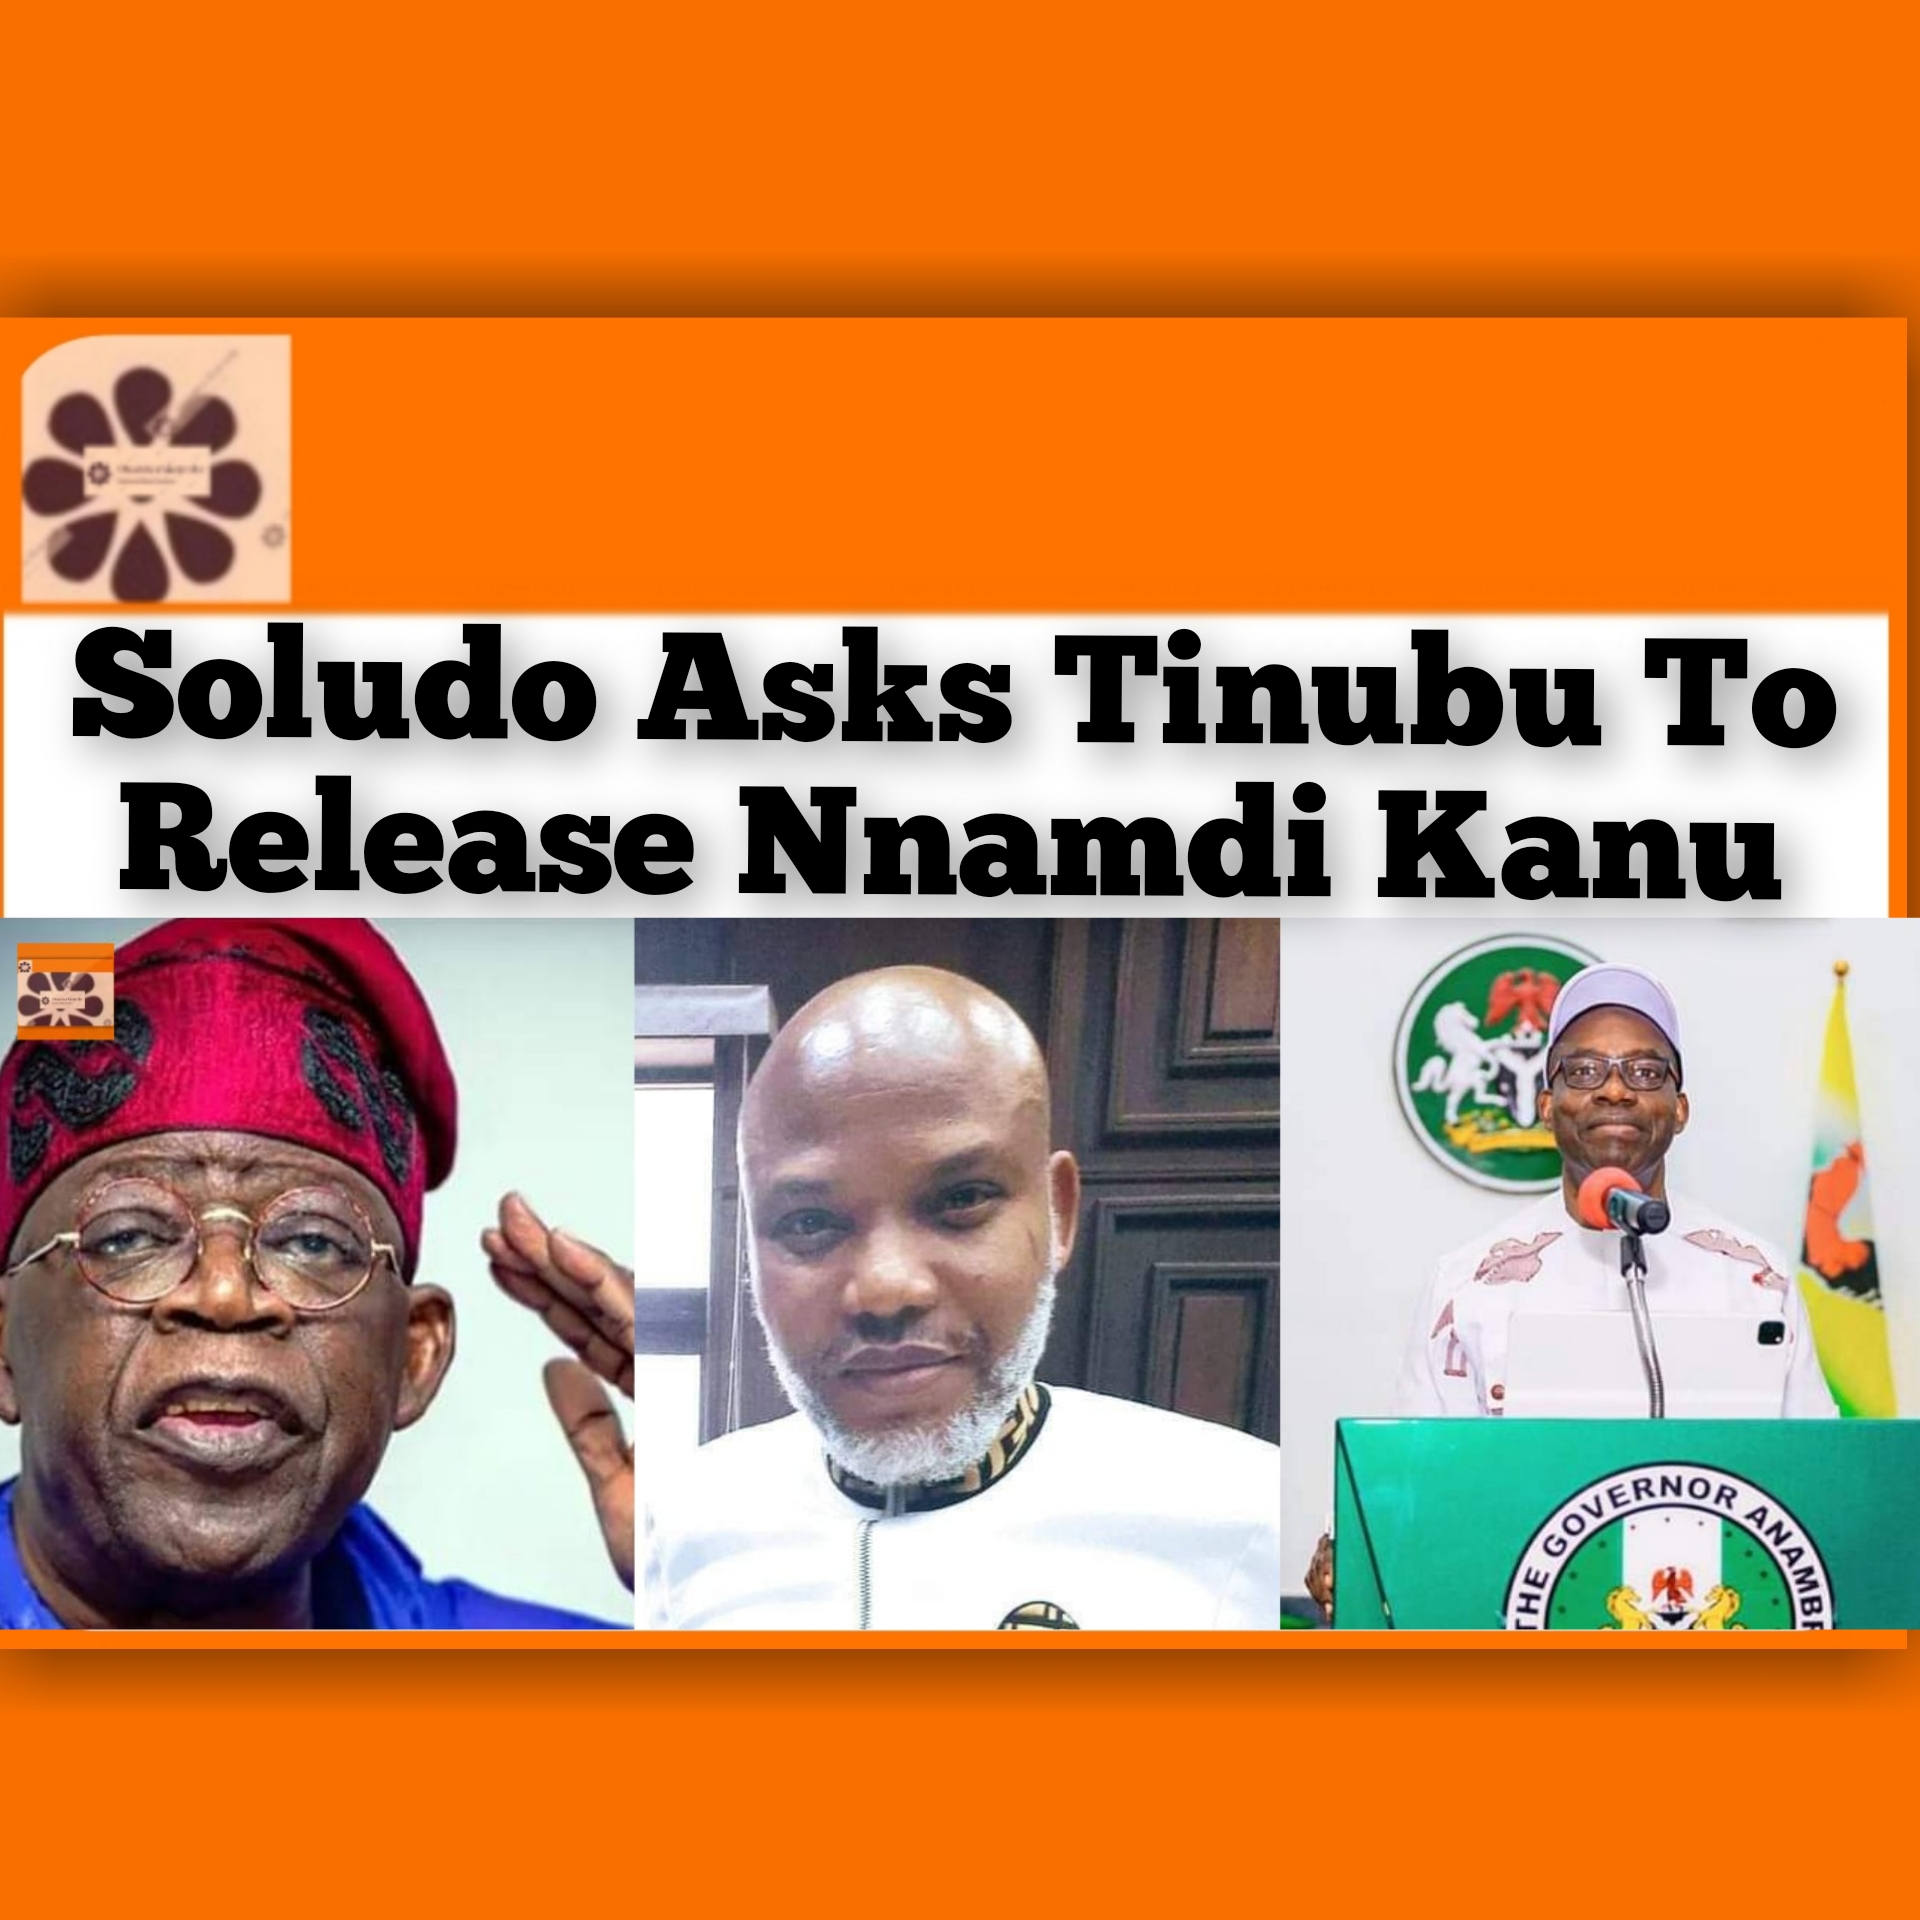 Soludo Asks Tinubu To Release Nnamdi Kanu ~ OsazuwaAkonedo #Biafra #Bola #development #economy #God #Gunmen #insecurity #justice #Kanu #Nigeria #Nigerian #Nigerians #Nnamdi #politics #release #security #Soludo #Tinubu #Unknown #Youths